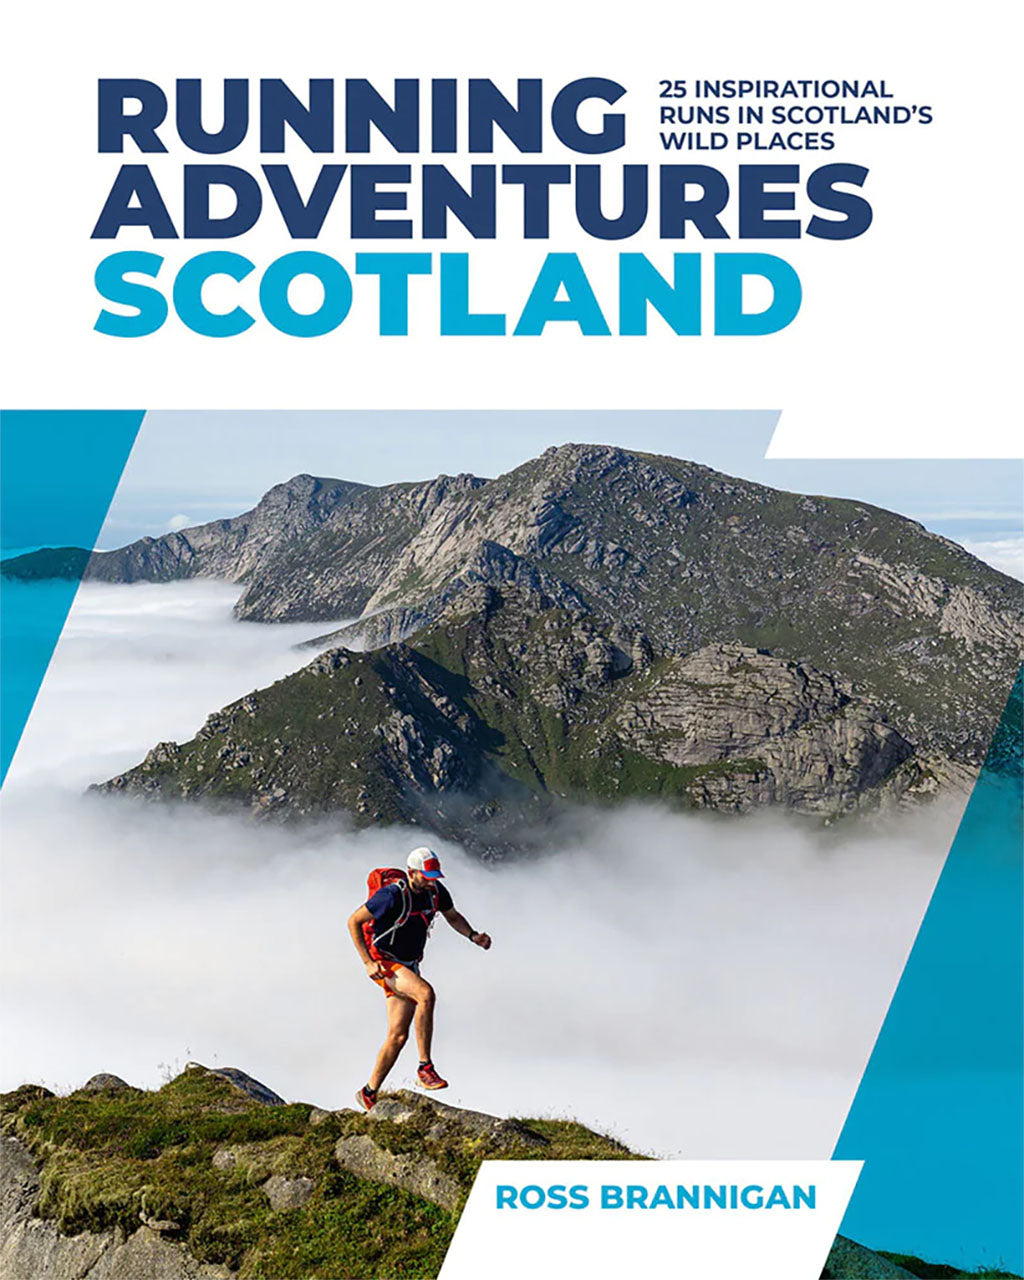 Running Adventures Scotland by Ross Branningan